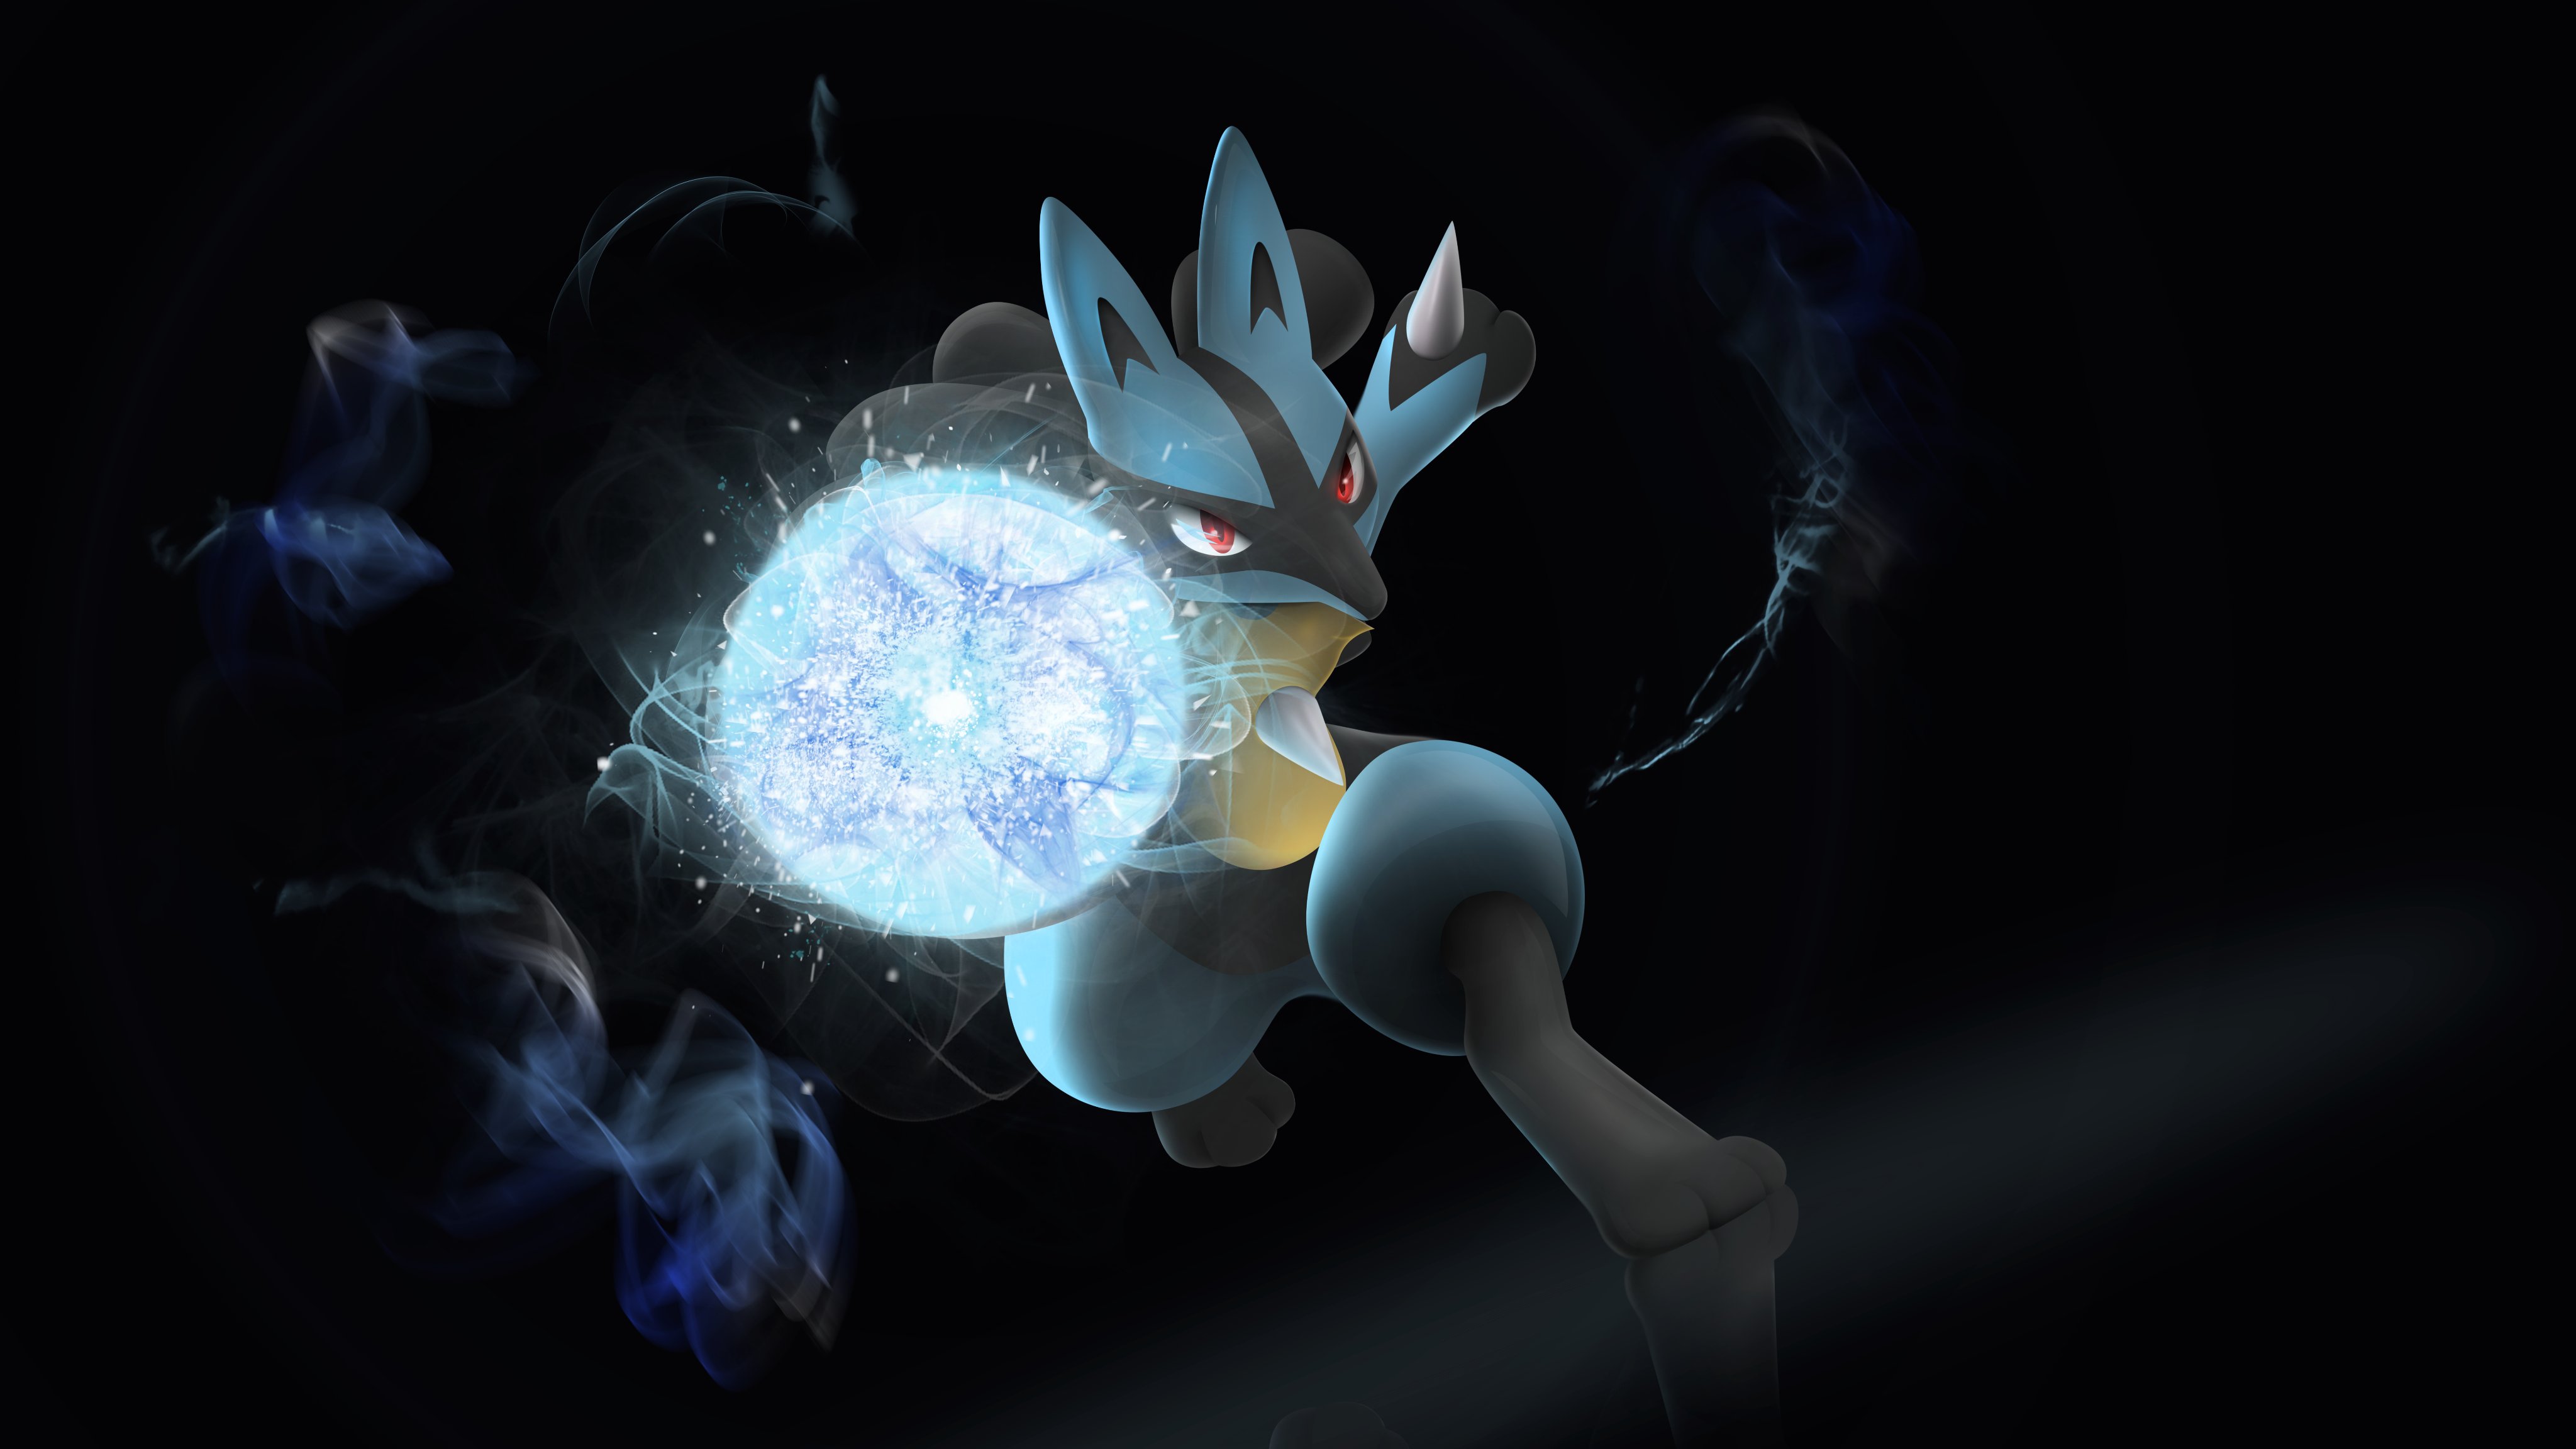 Bak on X: RT @All0412: Pokémon Mobile Wallpaper: Lucario #Shiny #Sinnoh  #Fanart  / X